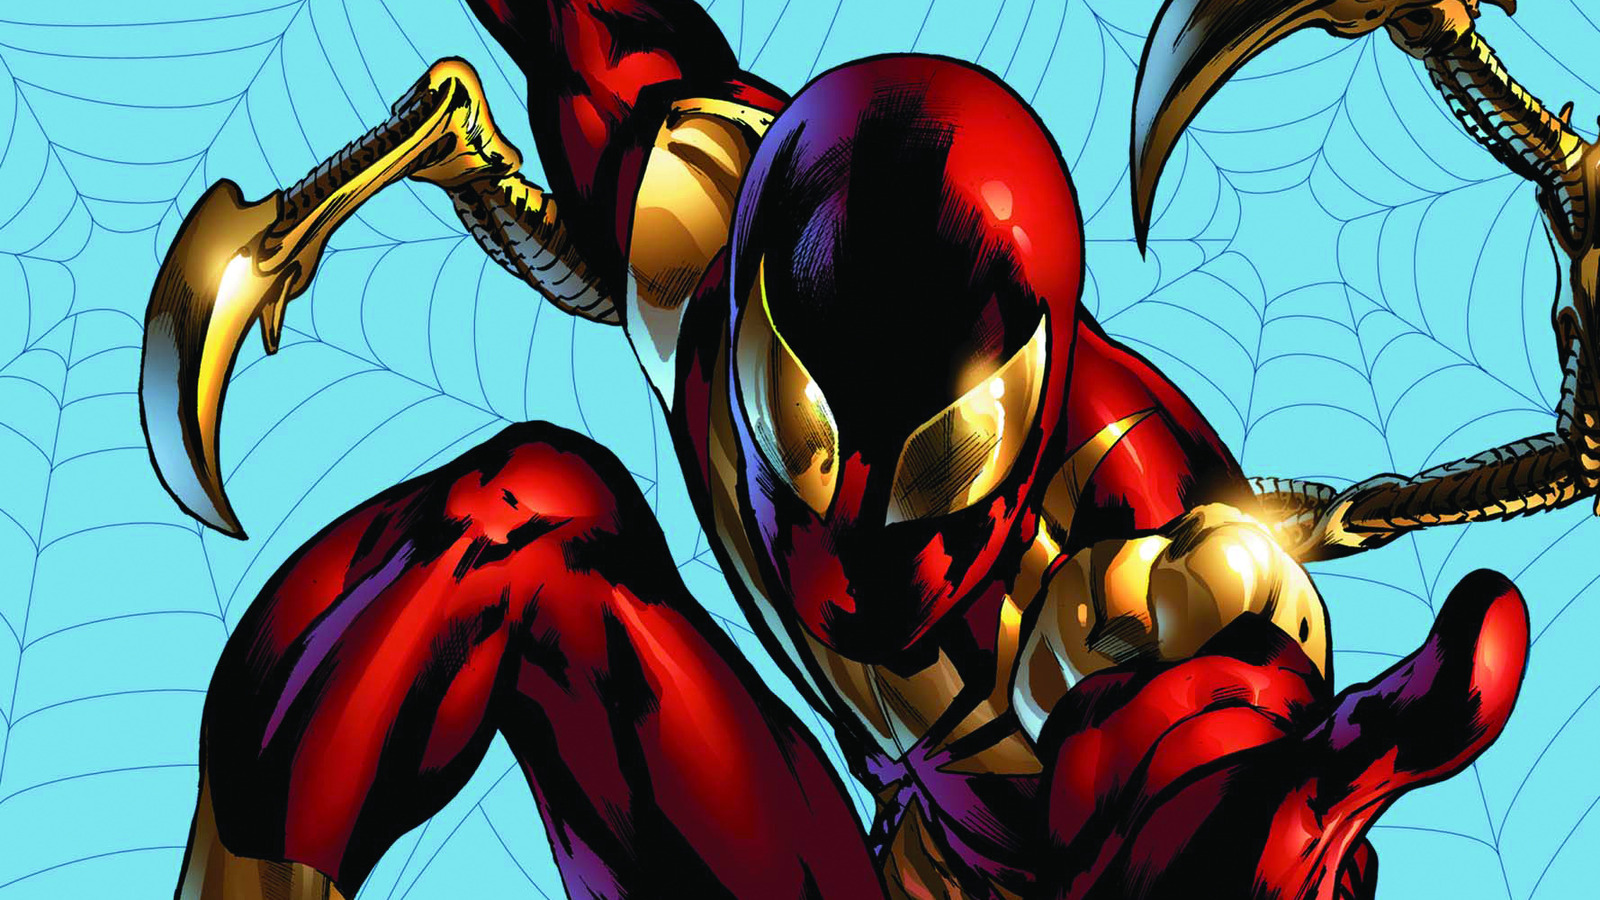 Cool Iron Spider Suit | Marvel spiderman art, Iron spider suit, Spiderman